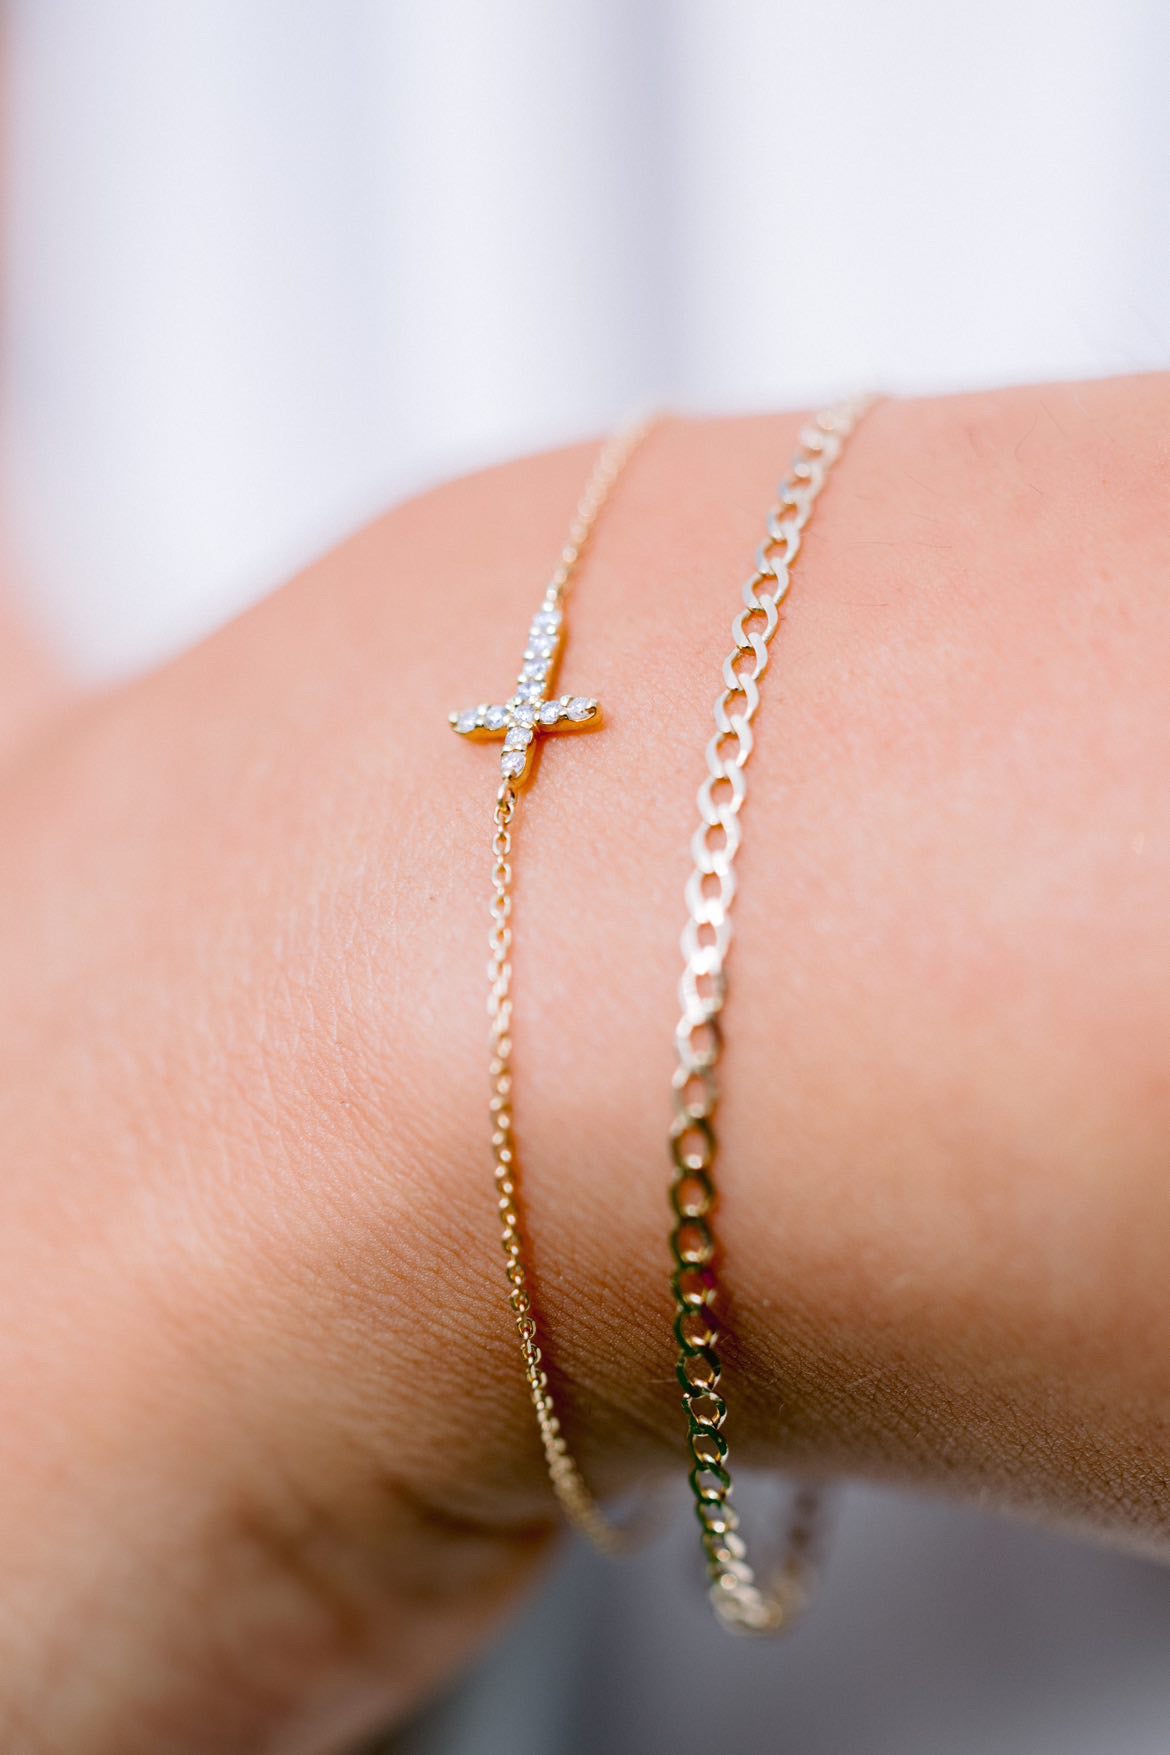 Buy 14k Real Gold Cross Bracelet | 14k Solid Gold Crucifix Bracelet for  Women | Dainty Sideways Cross Bracelet | Women's 14k Gold Religious Jewelry  | Gift for Her, Adjustable 6